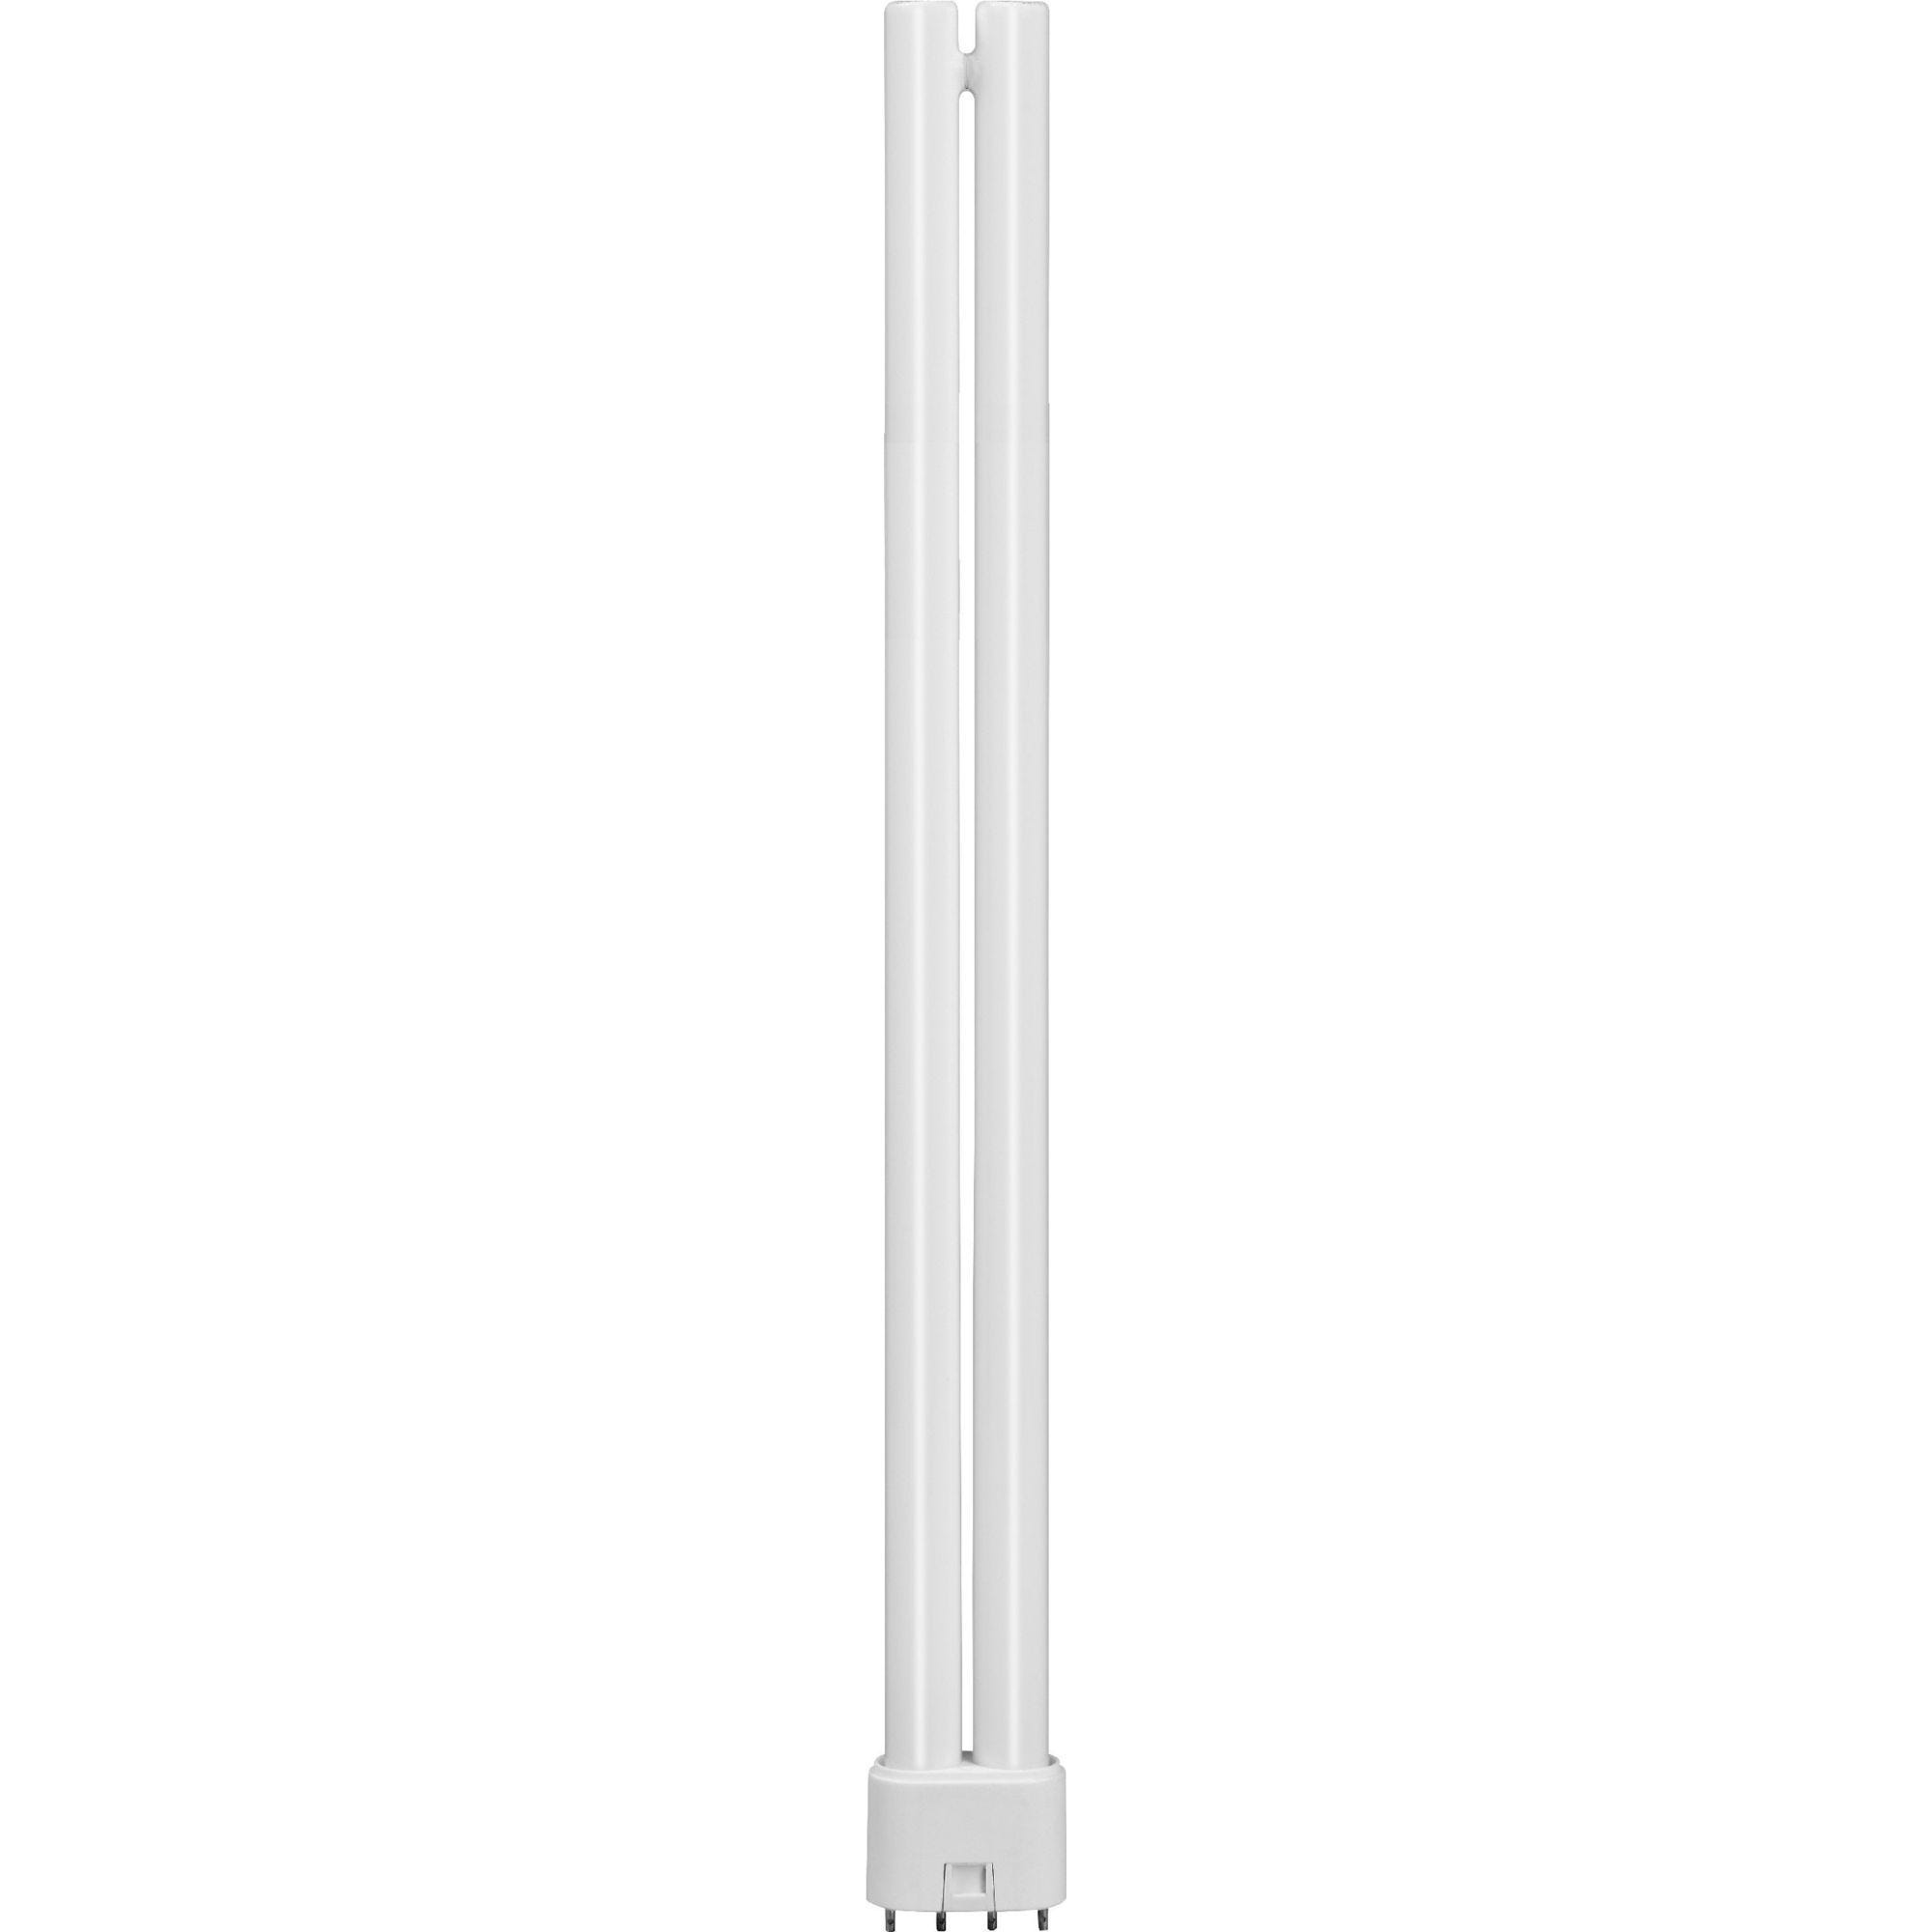 Lampe fluo-compacte LYNX-L 36W 830 2G11 3000K - SYLVANIA - 0025634 1